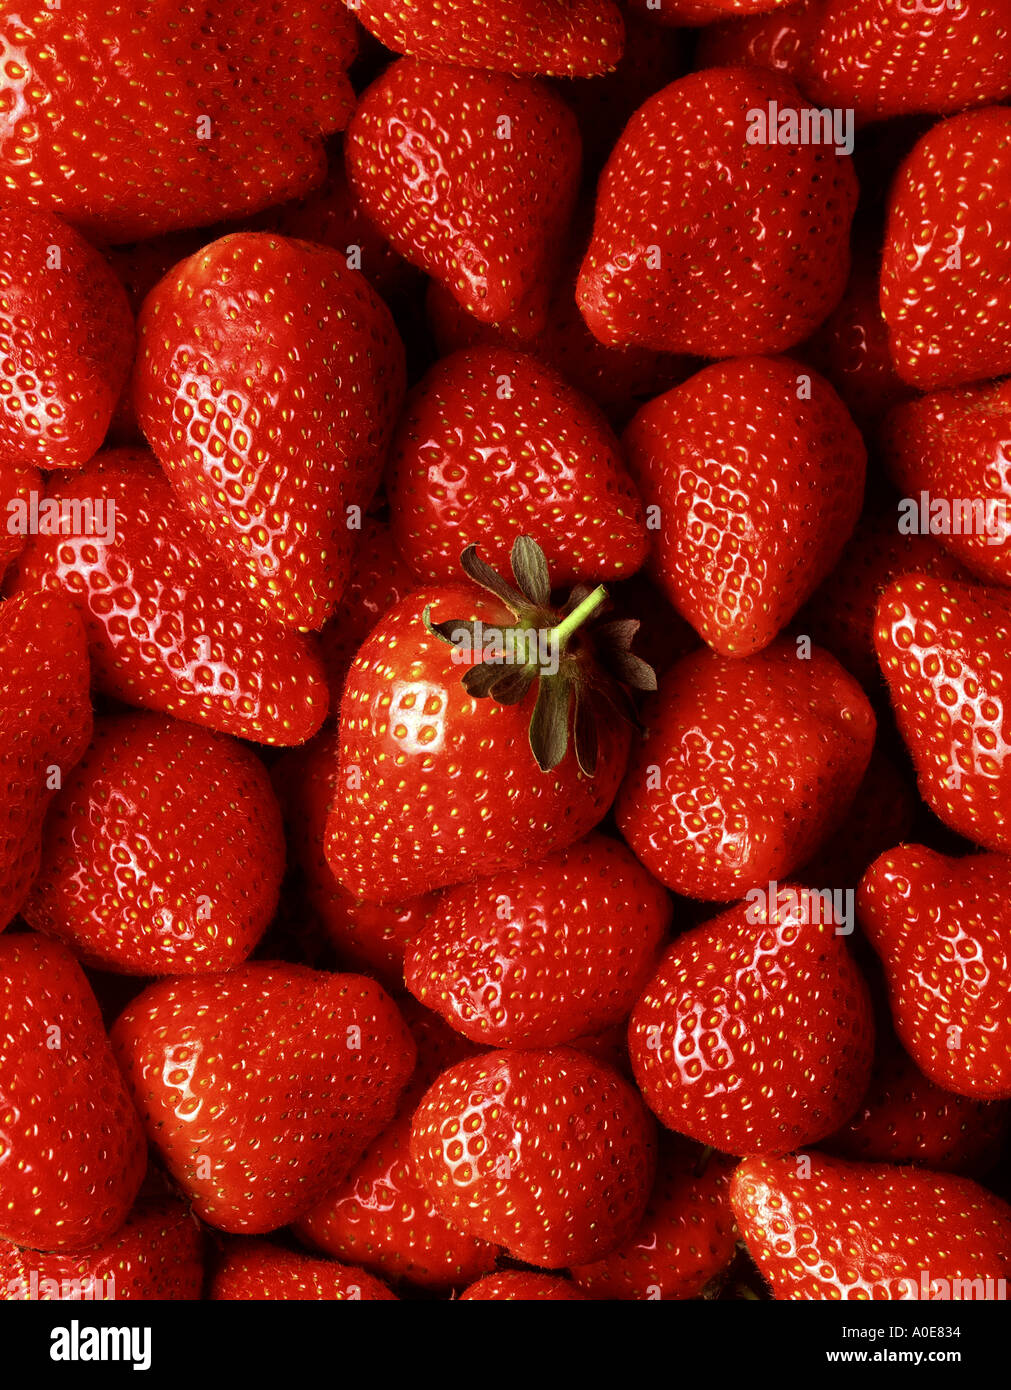 Strawberries many strawberries one with stalk Stock Photo